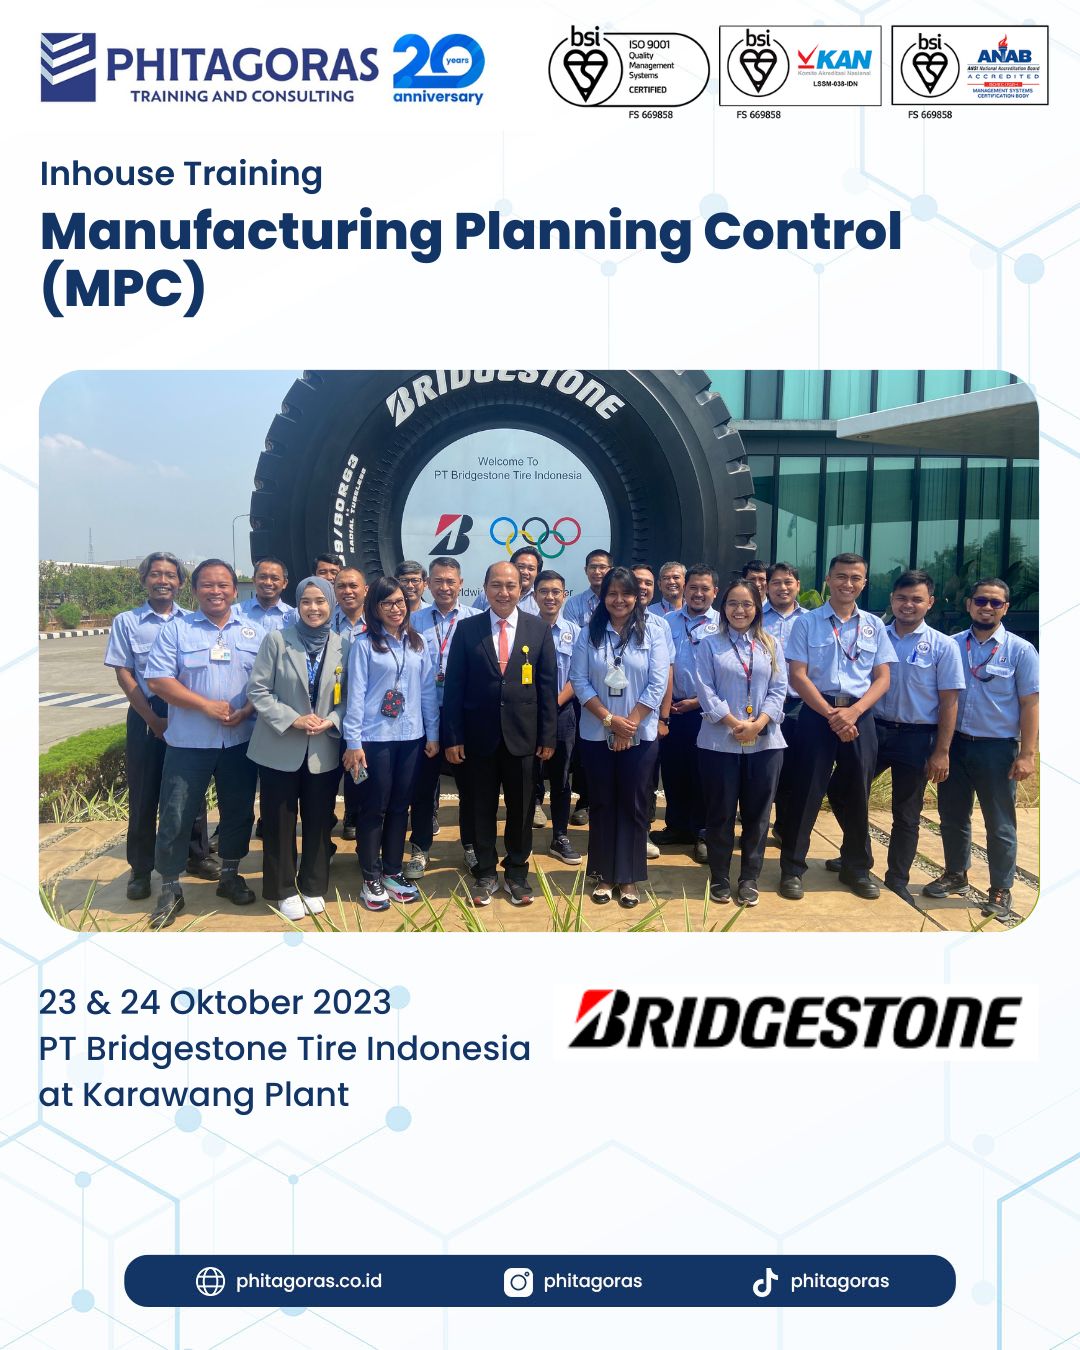 Inhouse Training Manufacturing Planning Control (MPC) - PT Bridgestone Tire Indonesia at Karawang Plant